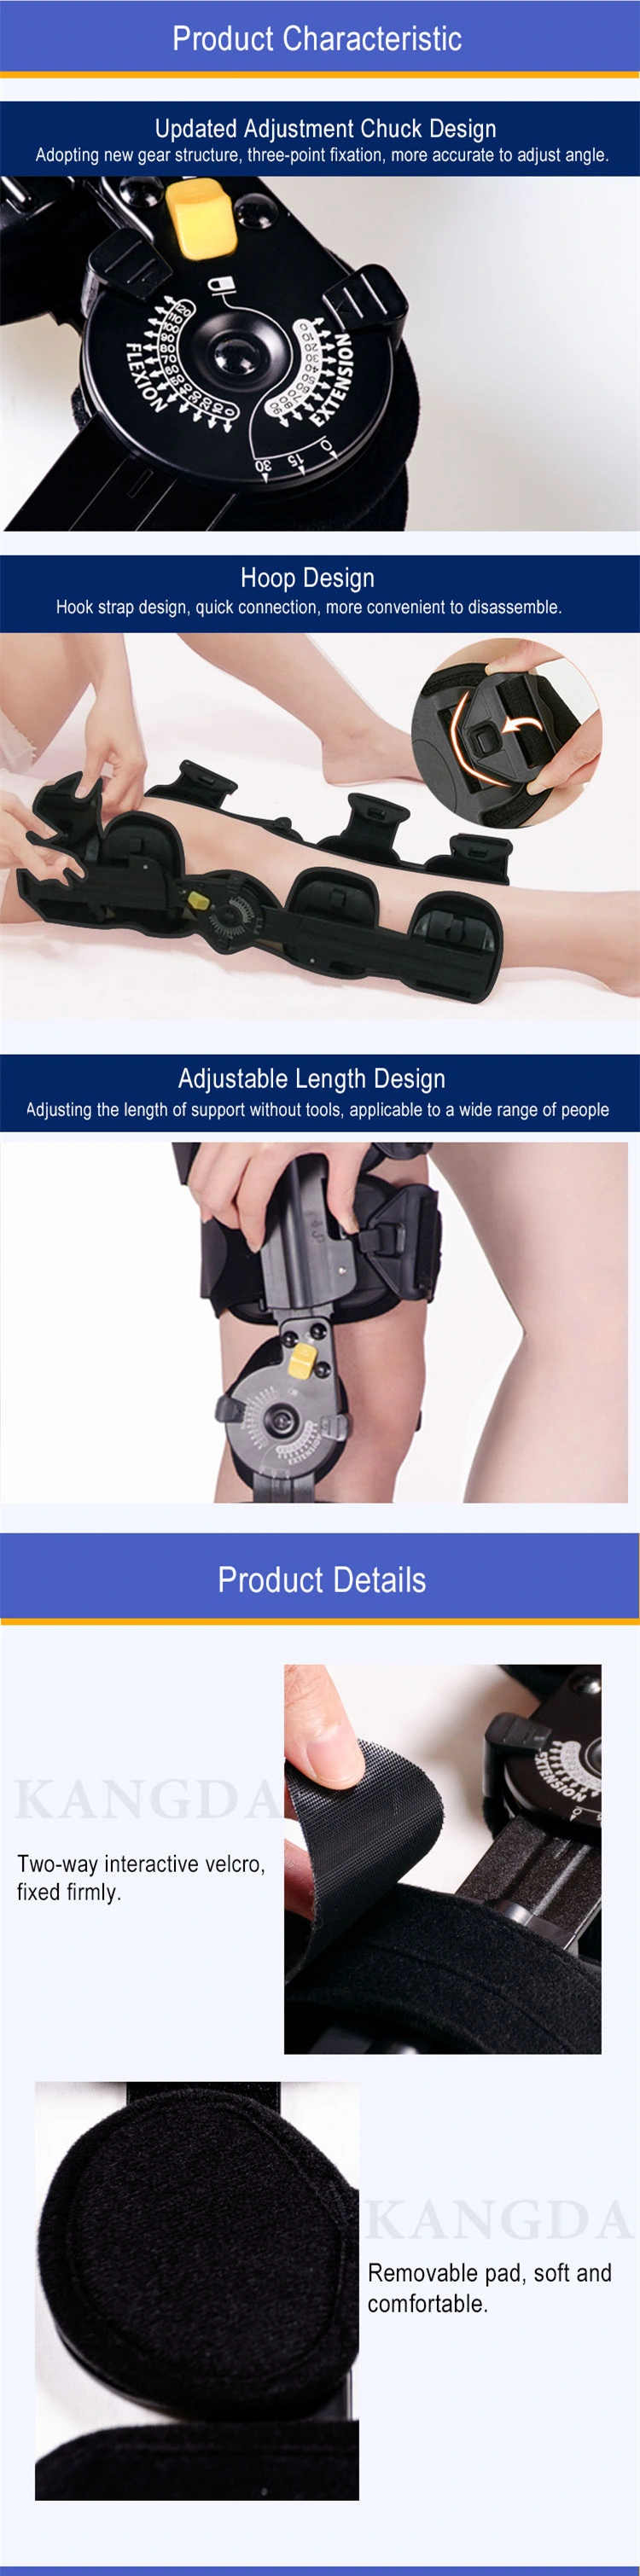 Medical Orthopedic Angle Adjustable ROM Hinged Knee Brace and Support